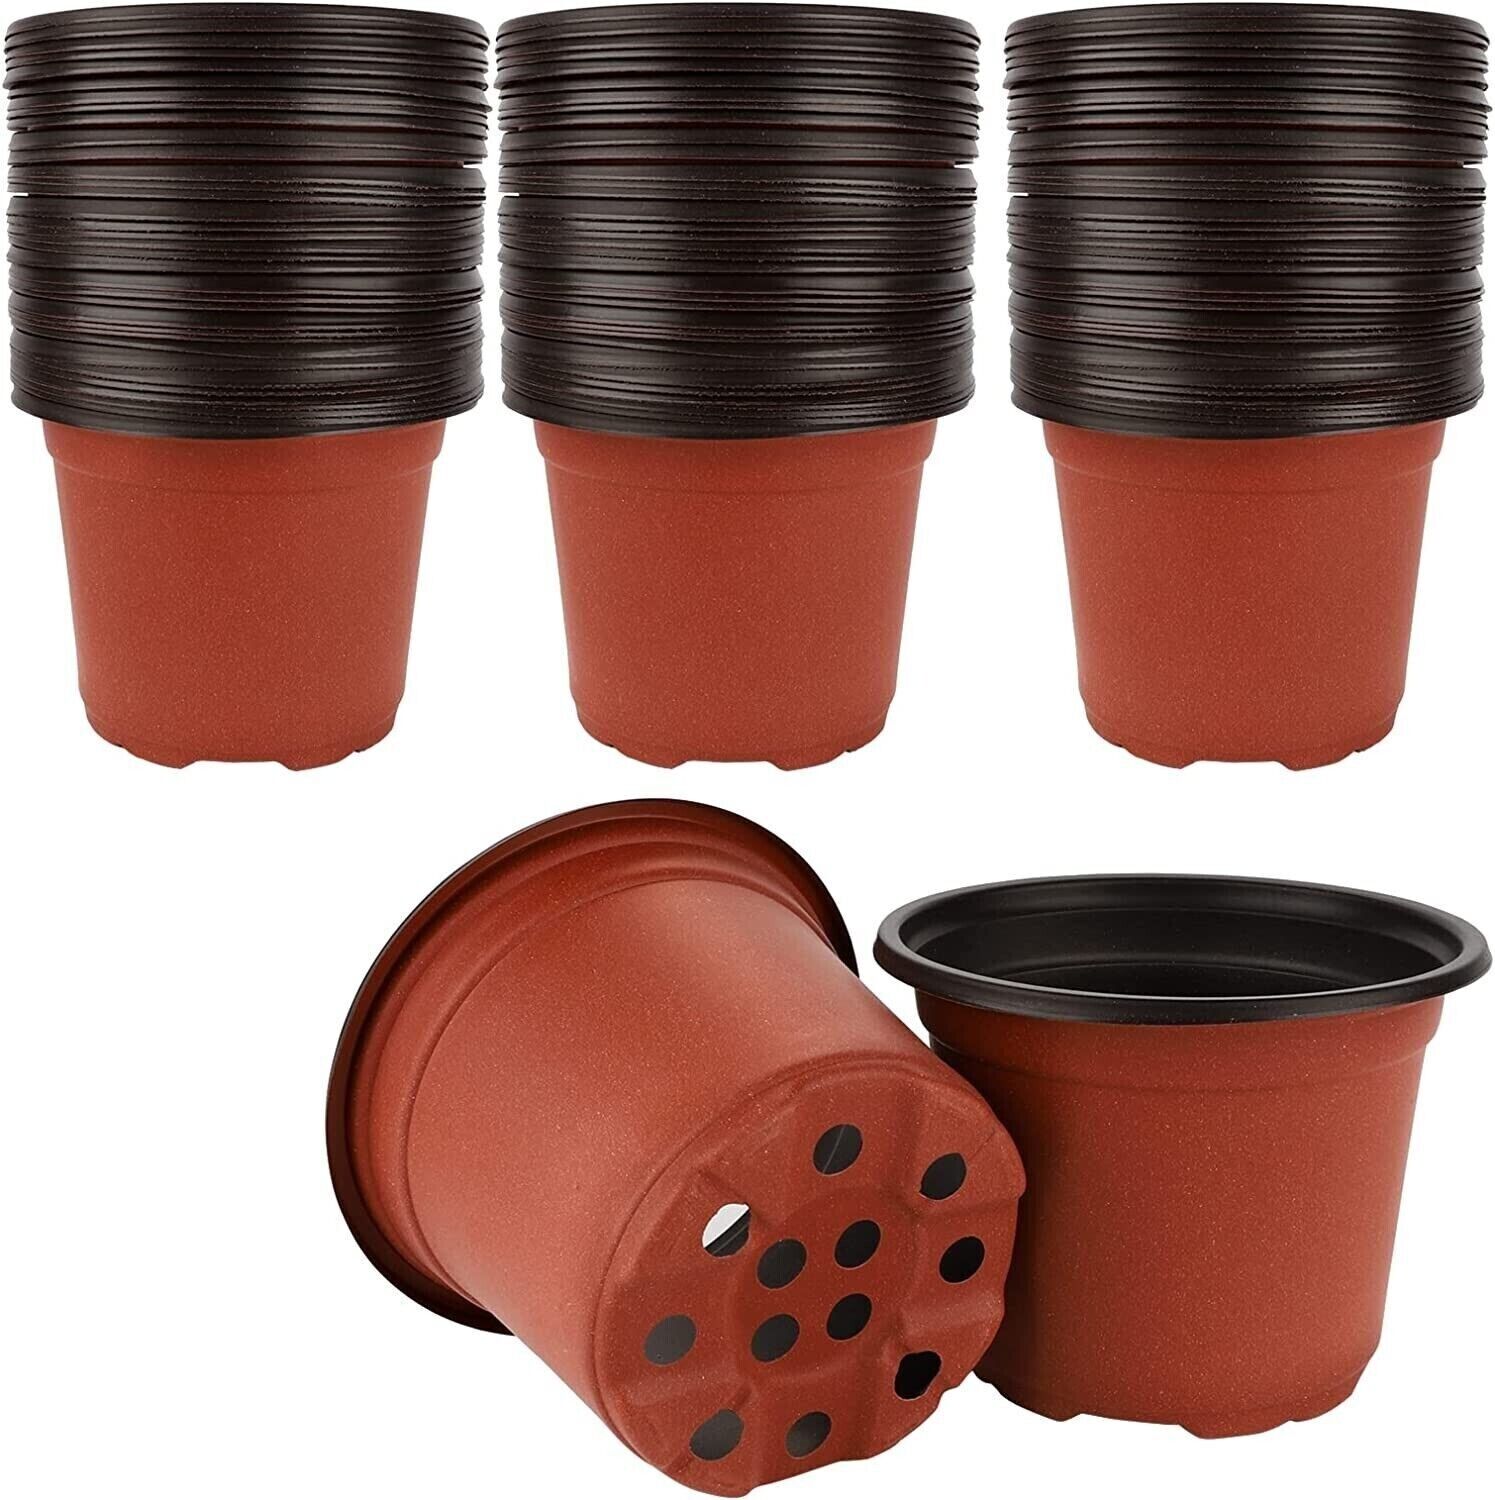 50 Pcs 6 Inch Plastic Nursery Pot/Pots Plant Pots Flower Plant Seed Starting